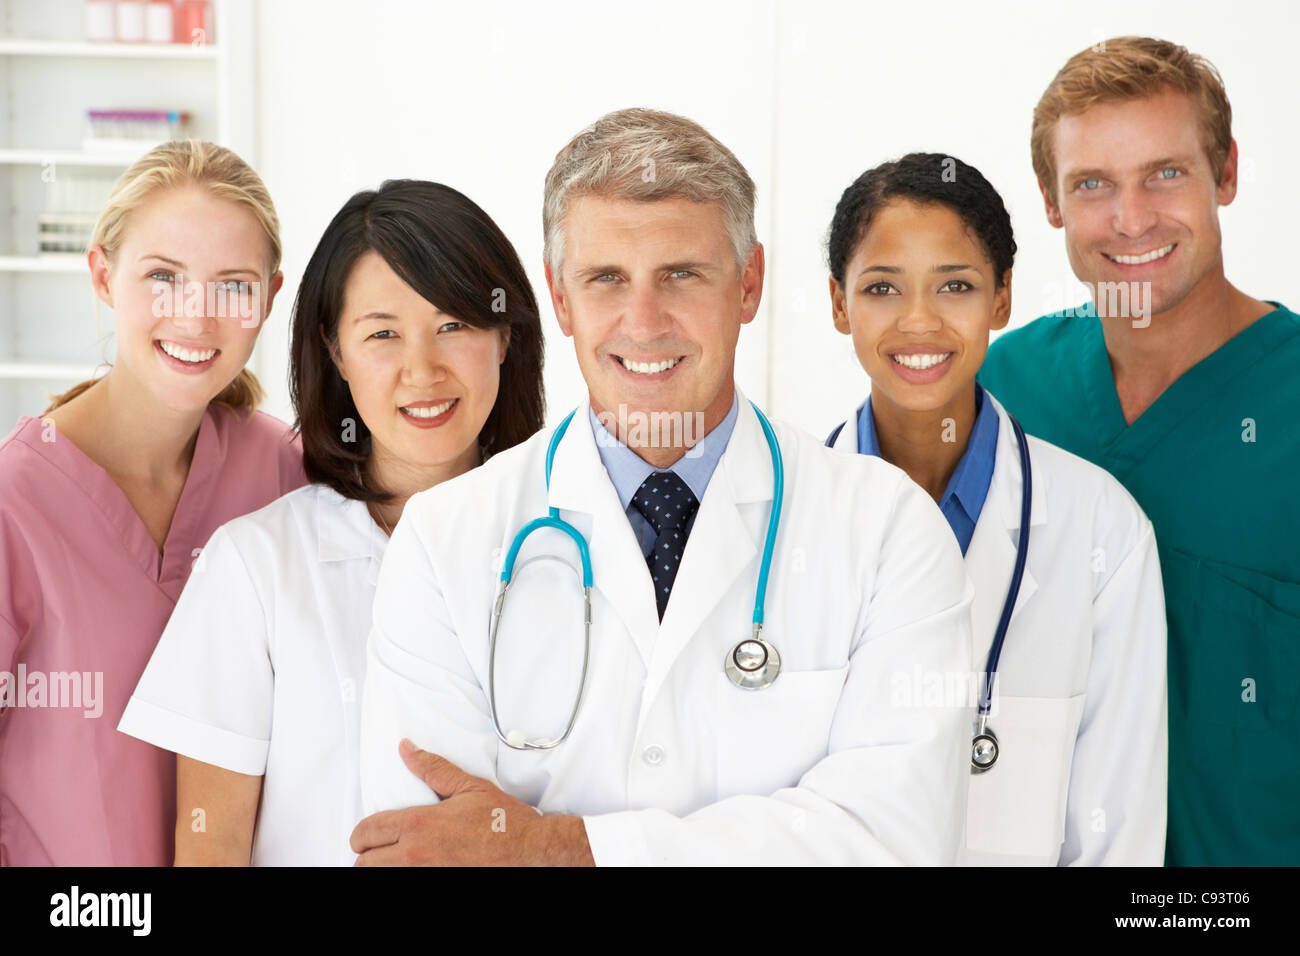 Portrait of medical professionals Stock Photo